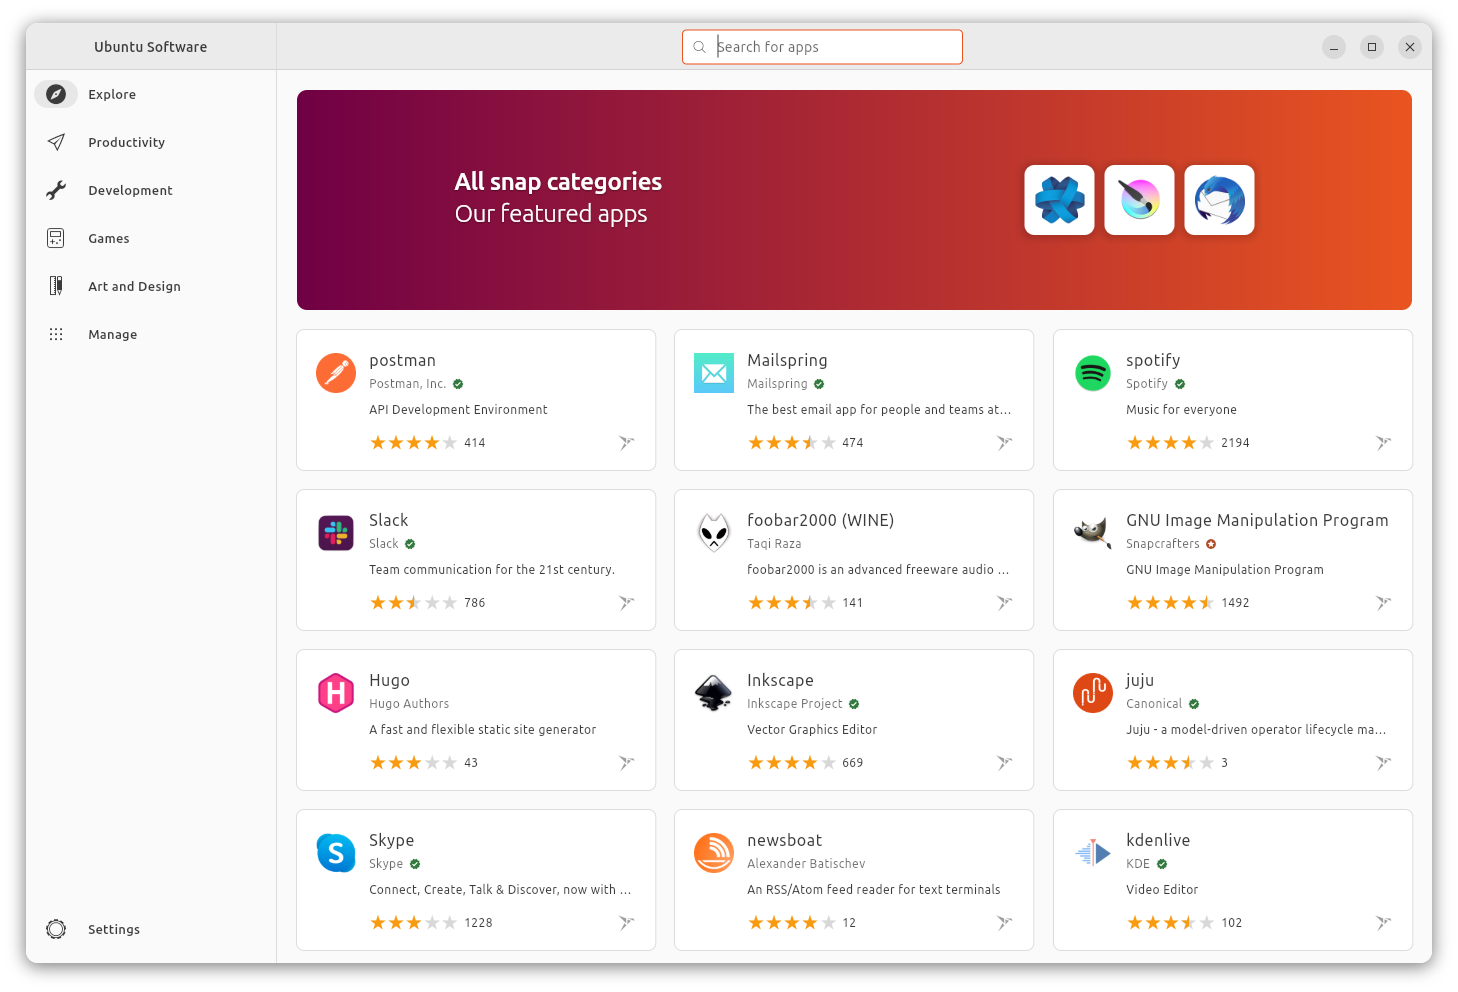 a screenshot of the new flutter-based app store running on ubuntu 23.10